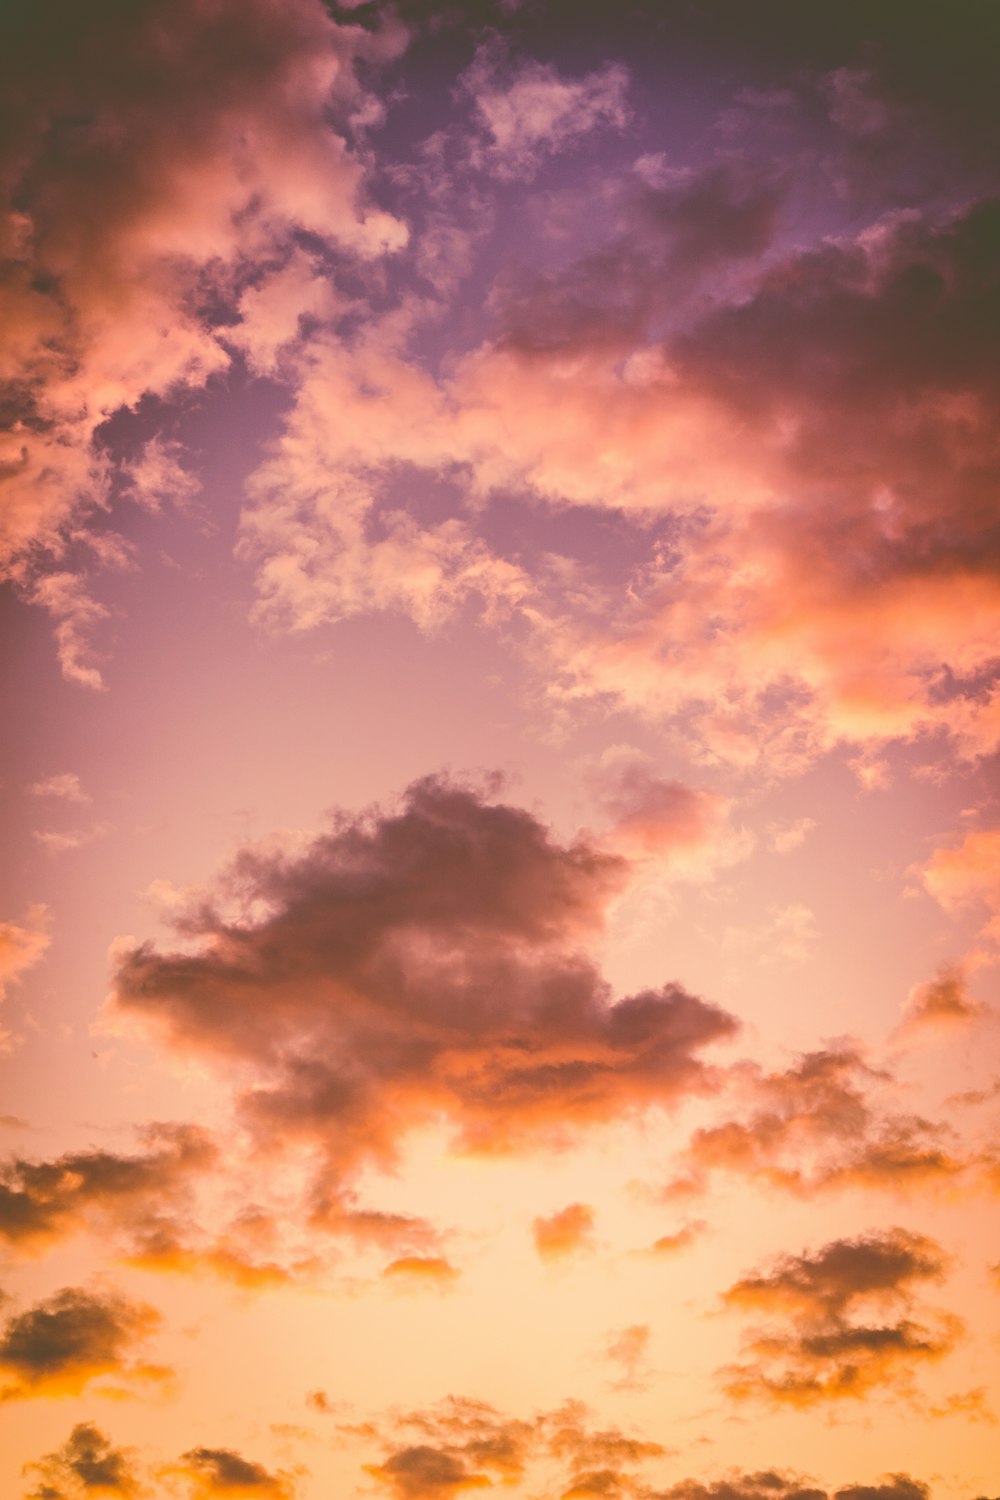 Download 20 Sunset Images Stunning Download Free Images On Unsplash PSD Mockup Templates